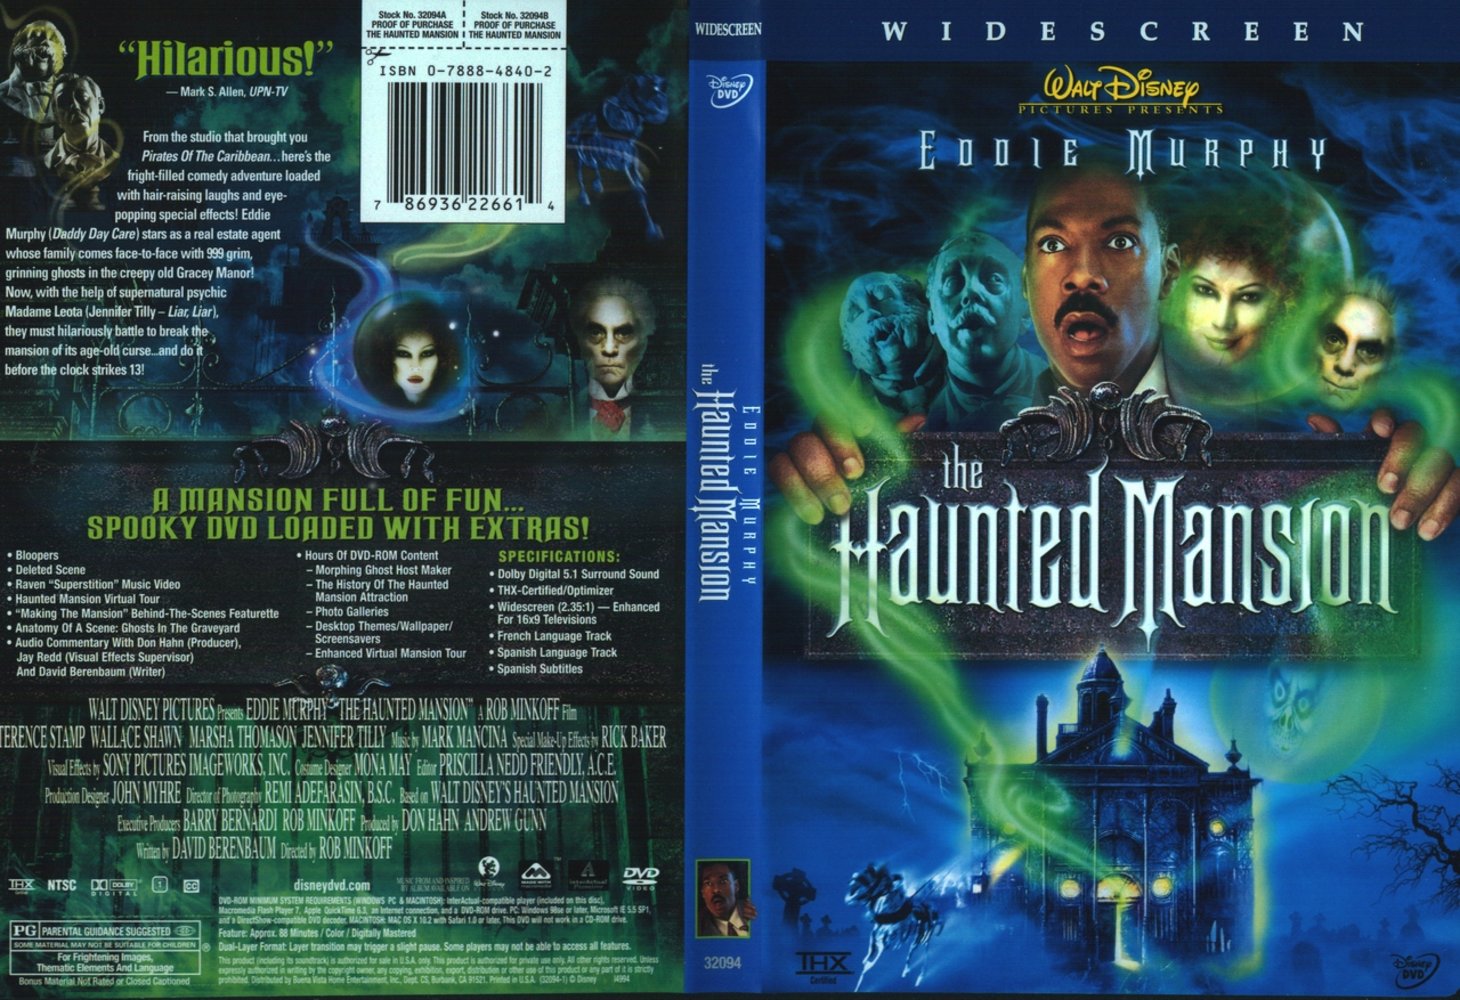 Haunted mansion 2. The Haunted Mansion 2003. Haunted Mansion игра 2003. Особняк с привидениями DVD. Особняк с привидениями обложка.